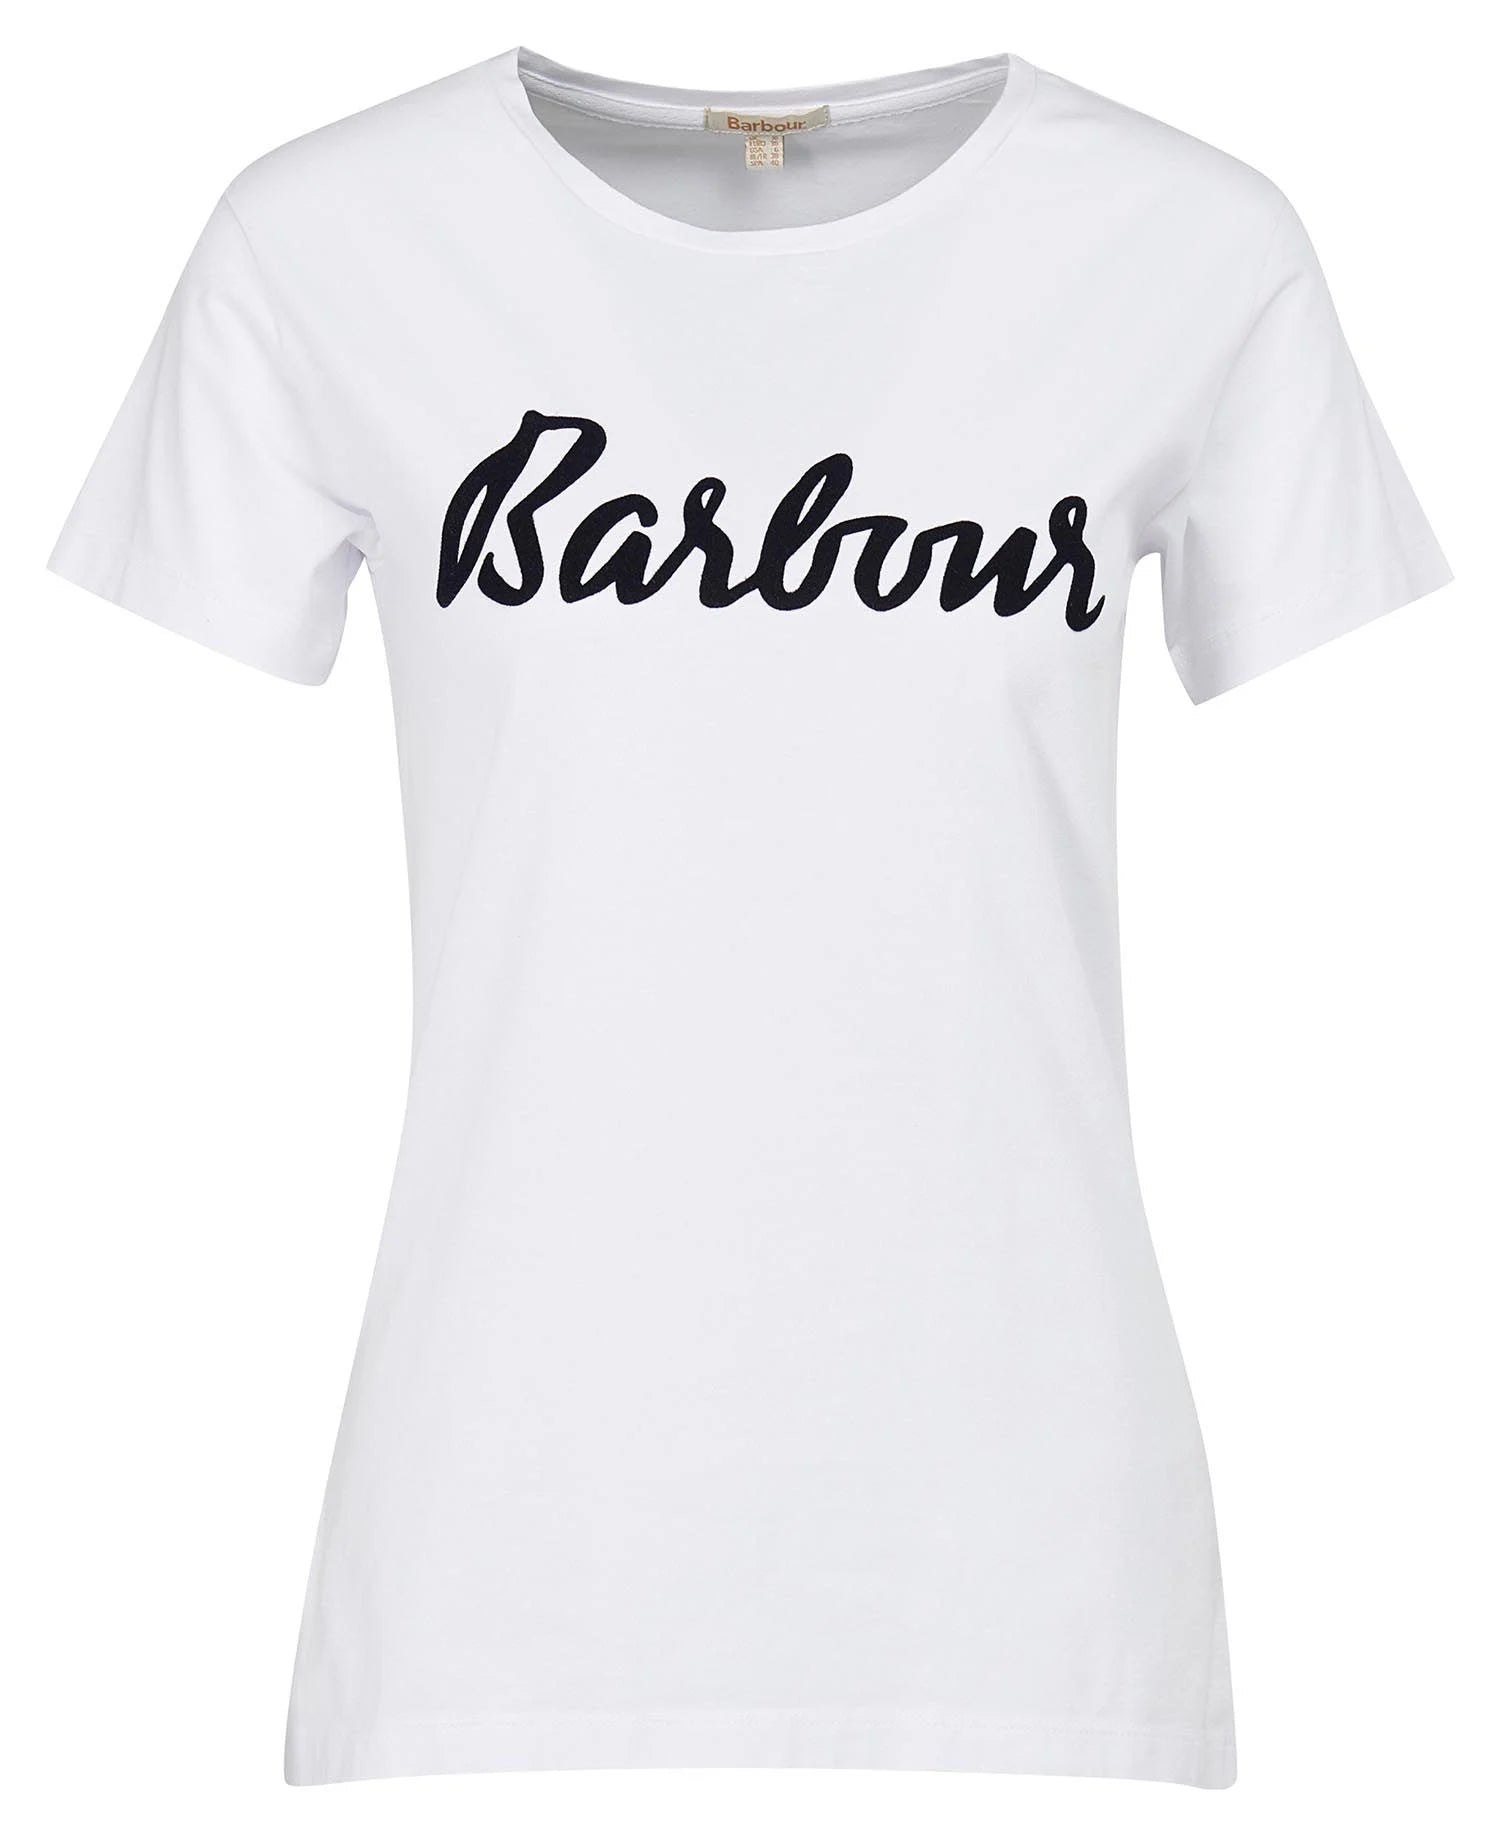 Barbour Otterburn T-Shirt - White/Navy